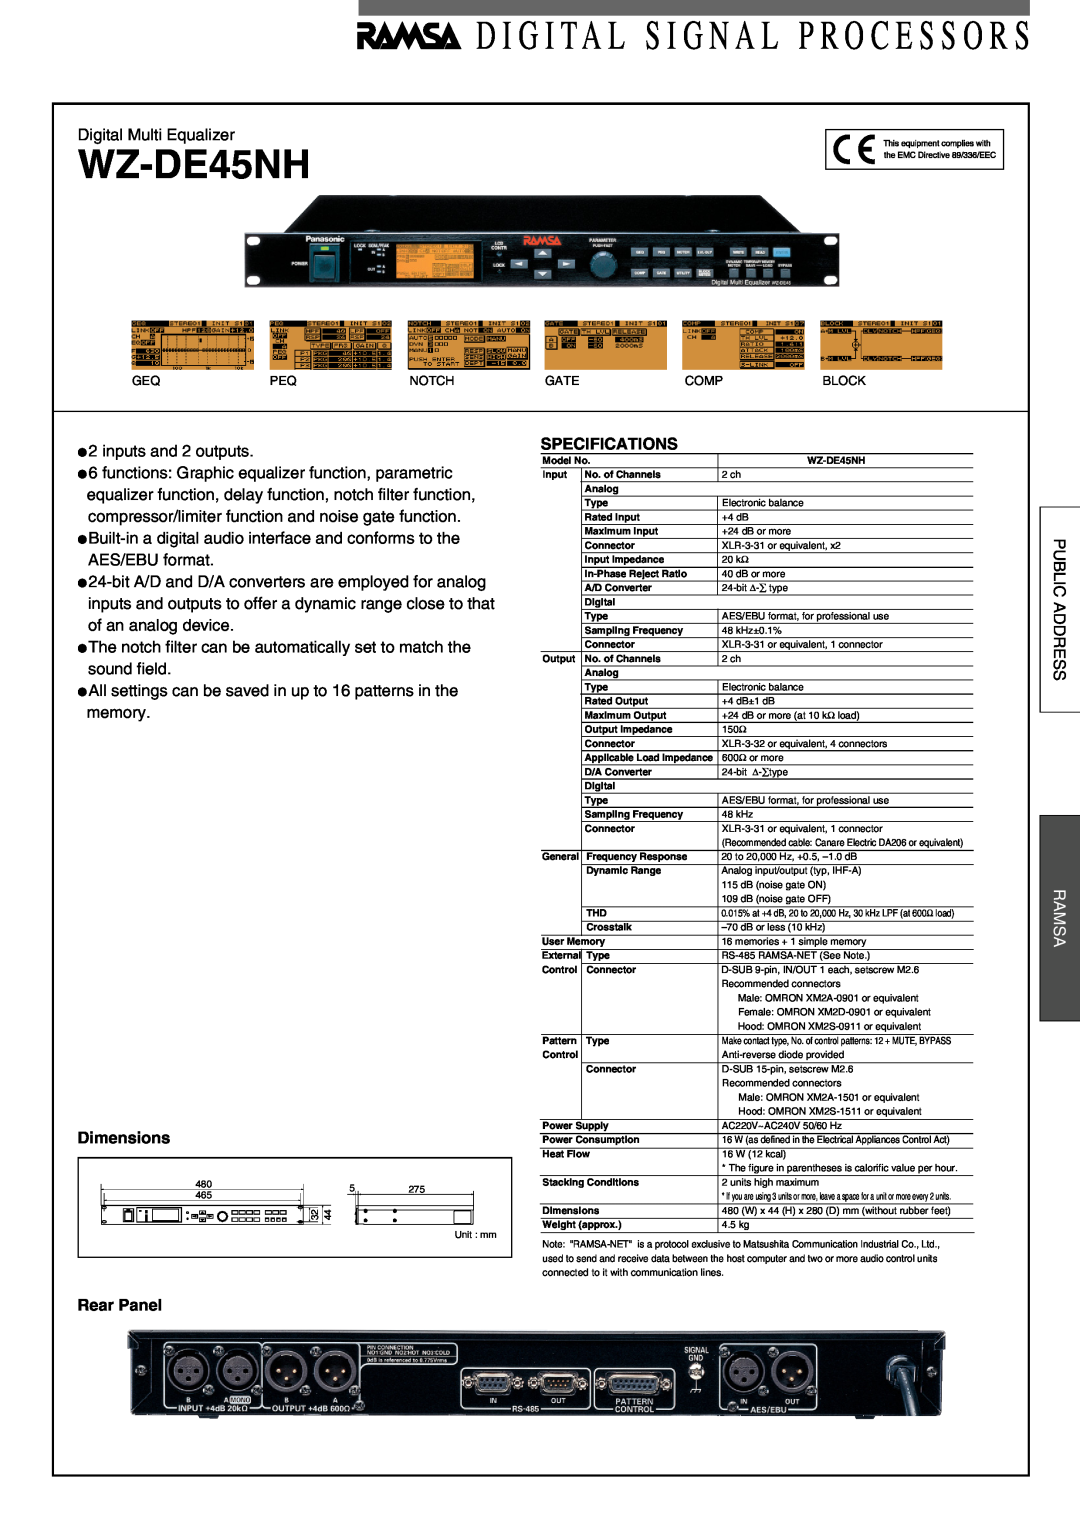 Panasonic WZ-DE45NH dimensions D I G I Ta L S I G N A L P R O C E S S O R S, Dimensions, Specifications, Ramsa, Rear Panel 